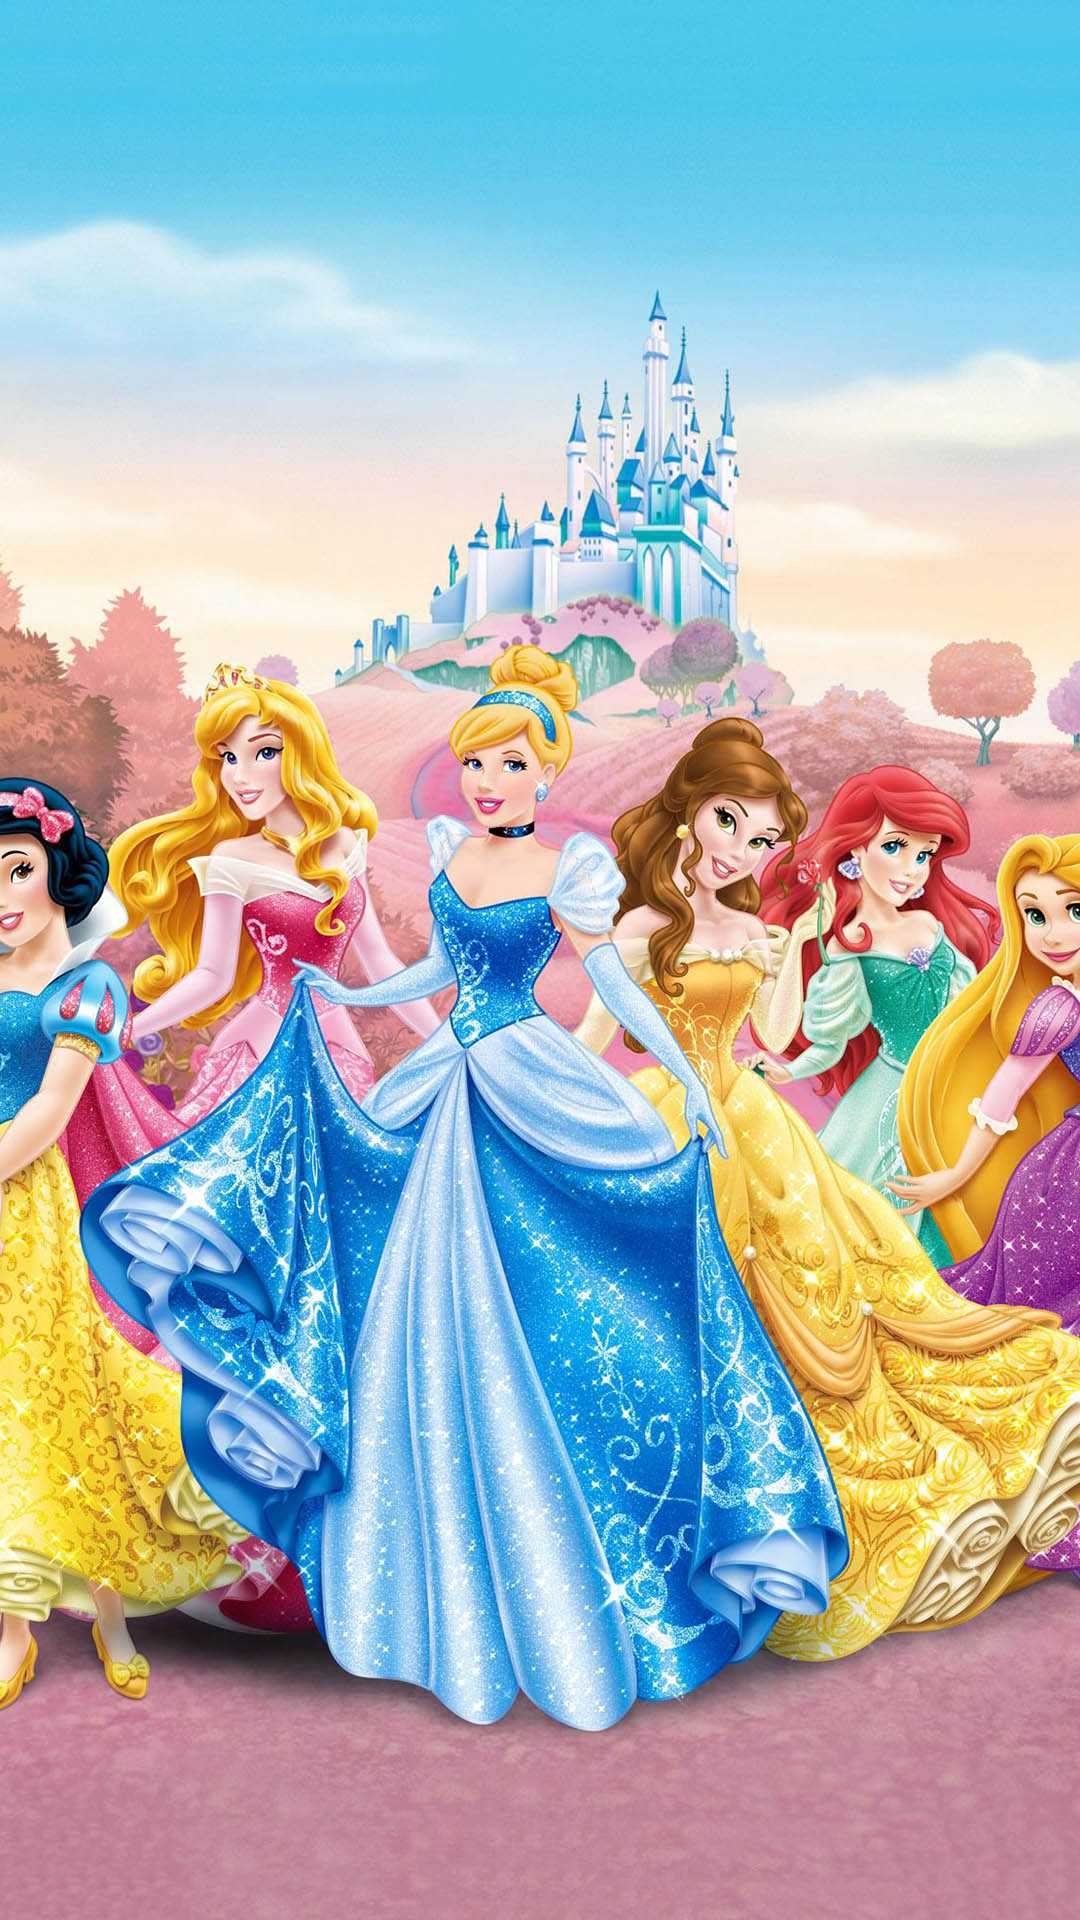 Disney Princess iPhone Wallpaper  iPhone Wallpapers